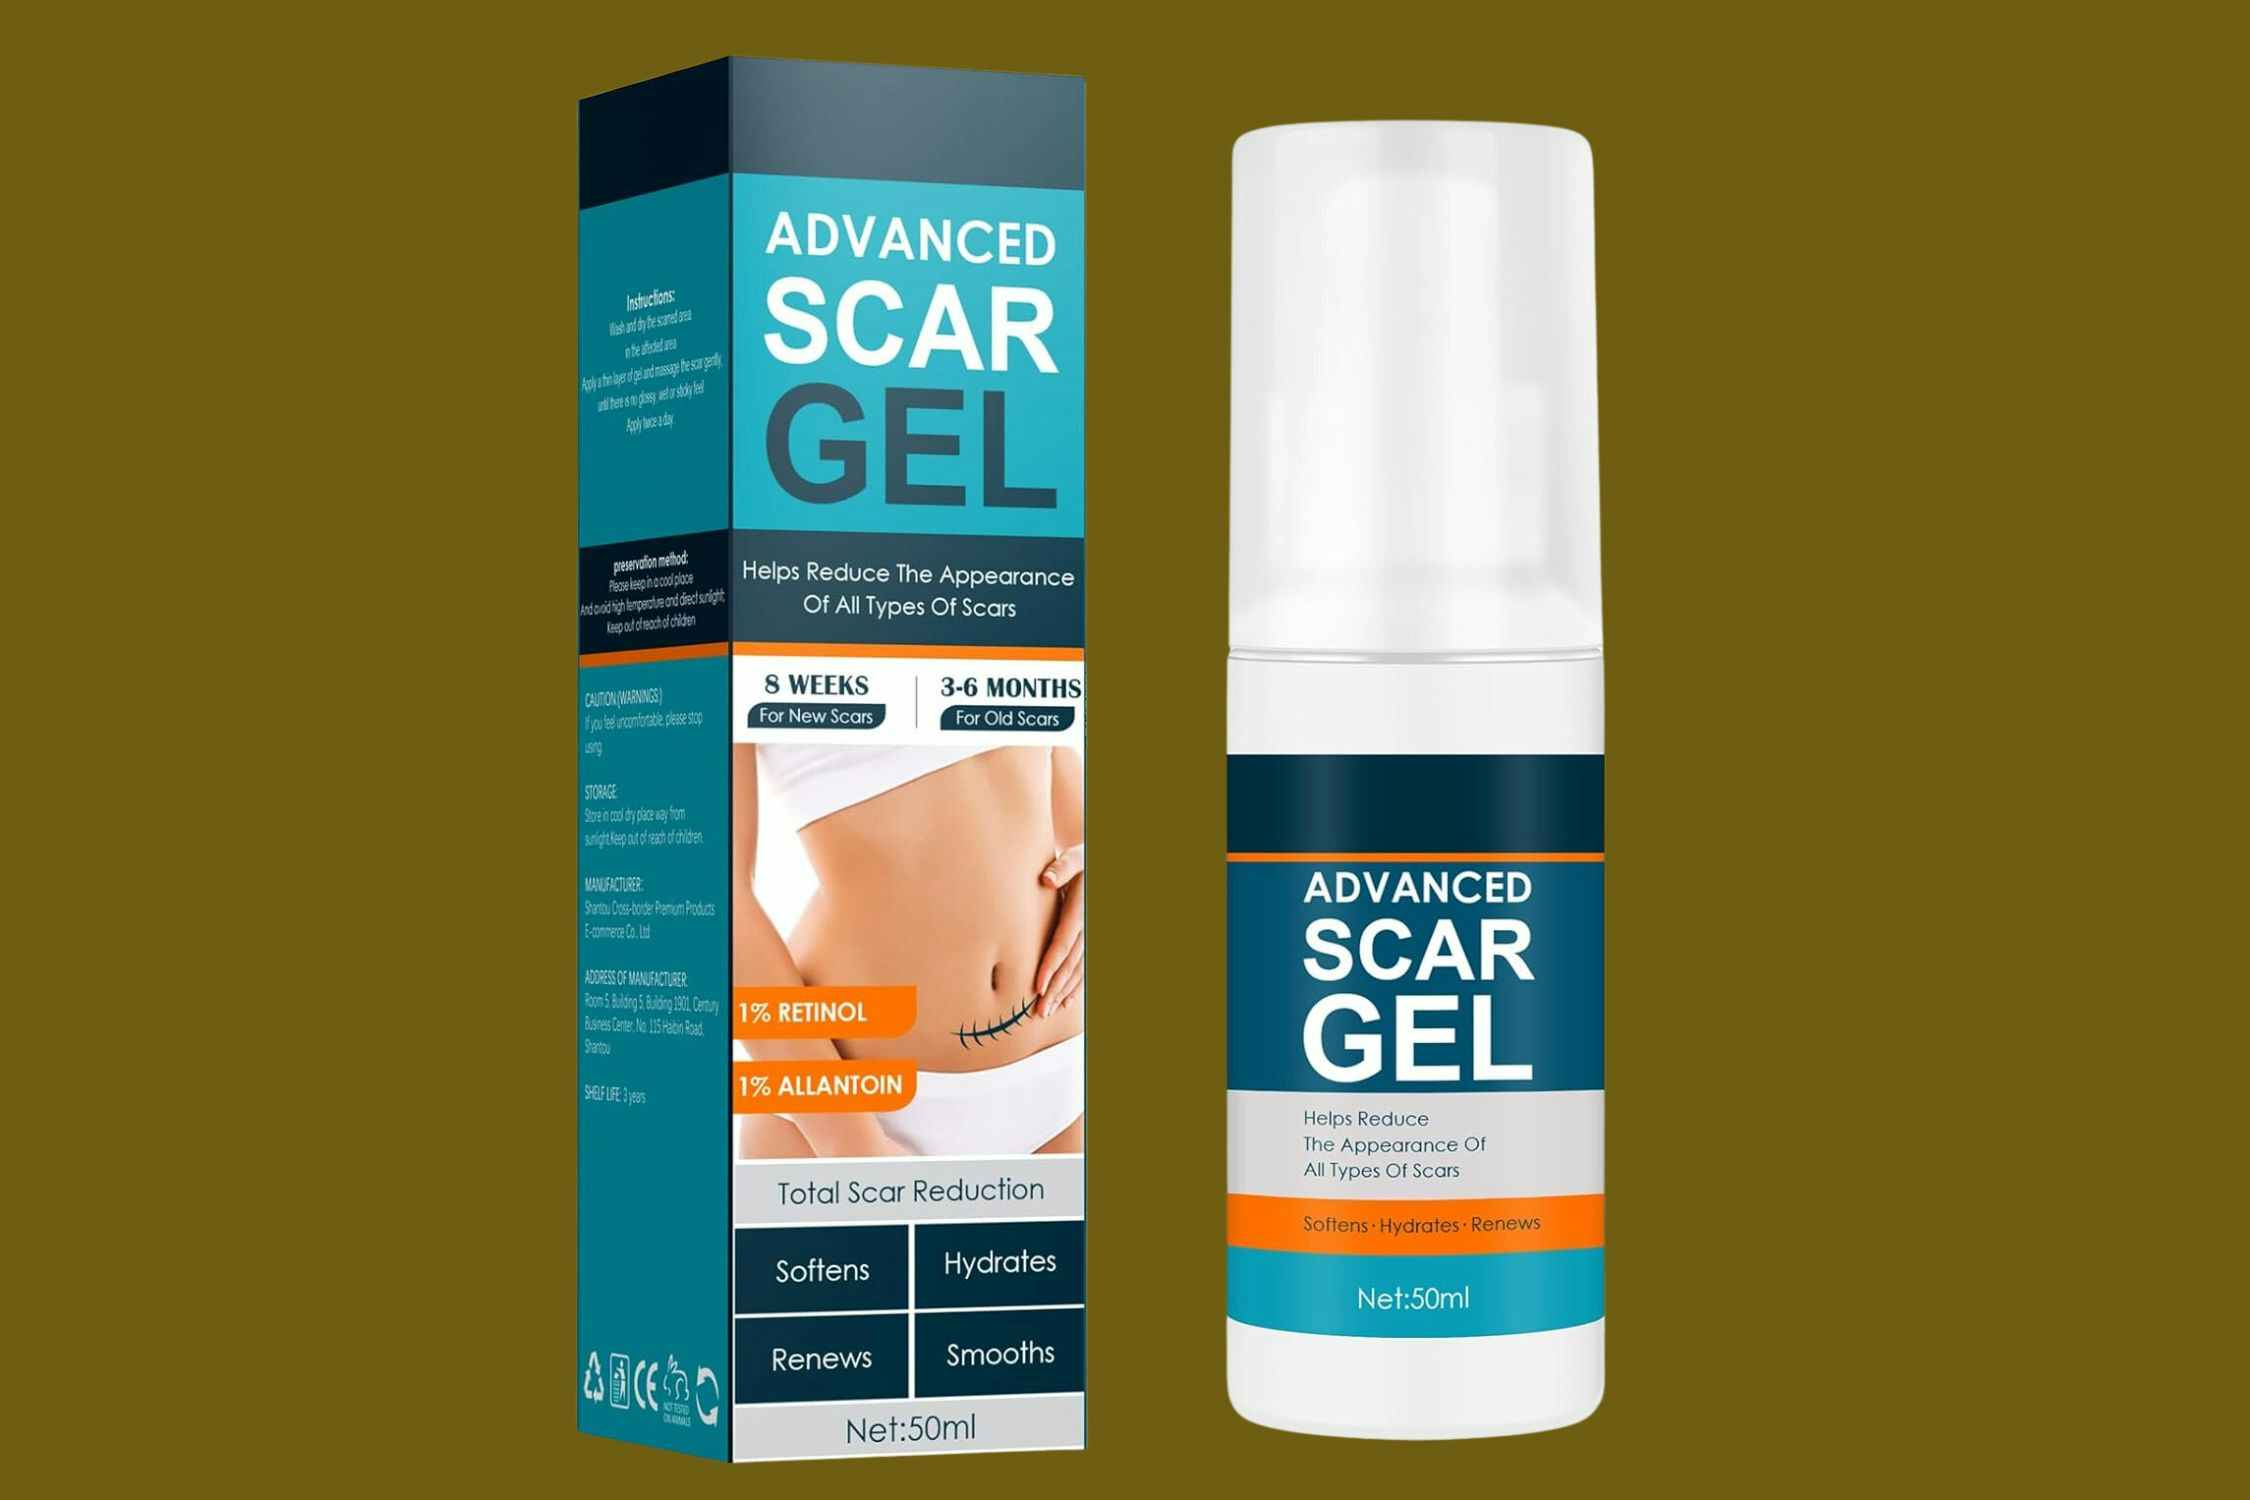 Advanced Scar Gel, as Low as $5.39 on Amazon 